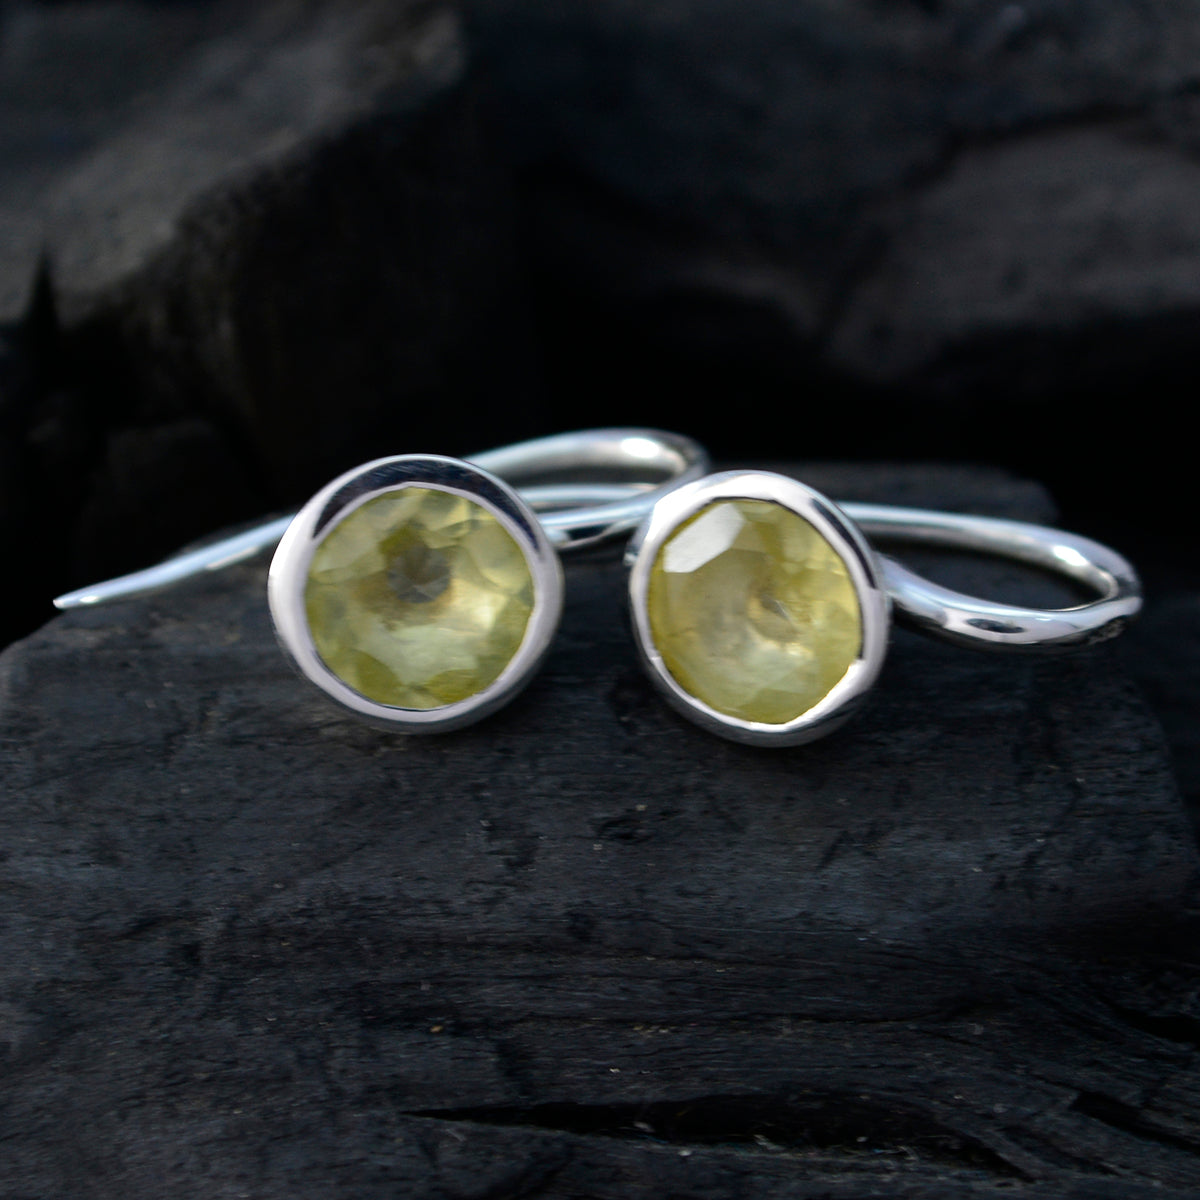 Riyo Real Gemstones round Faceted Yellow Lemon Quartz Silver Earrings thanks giving gift